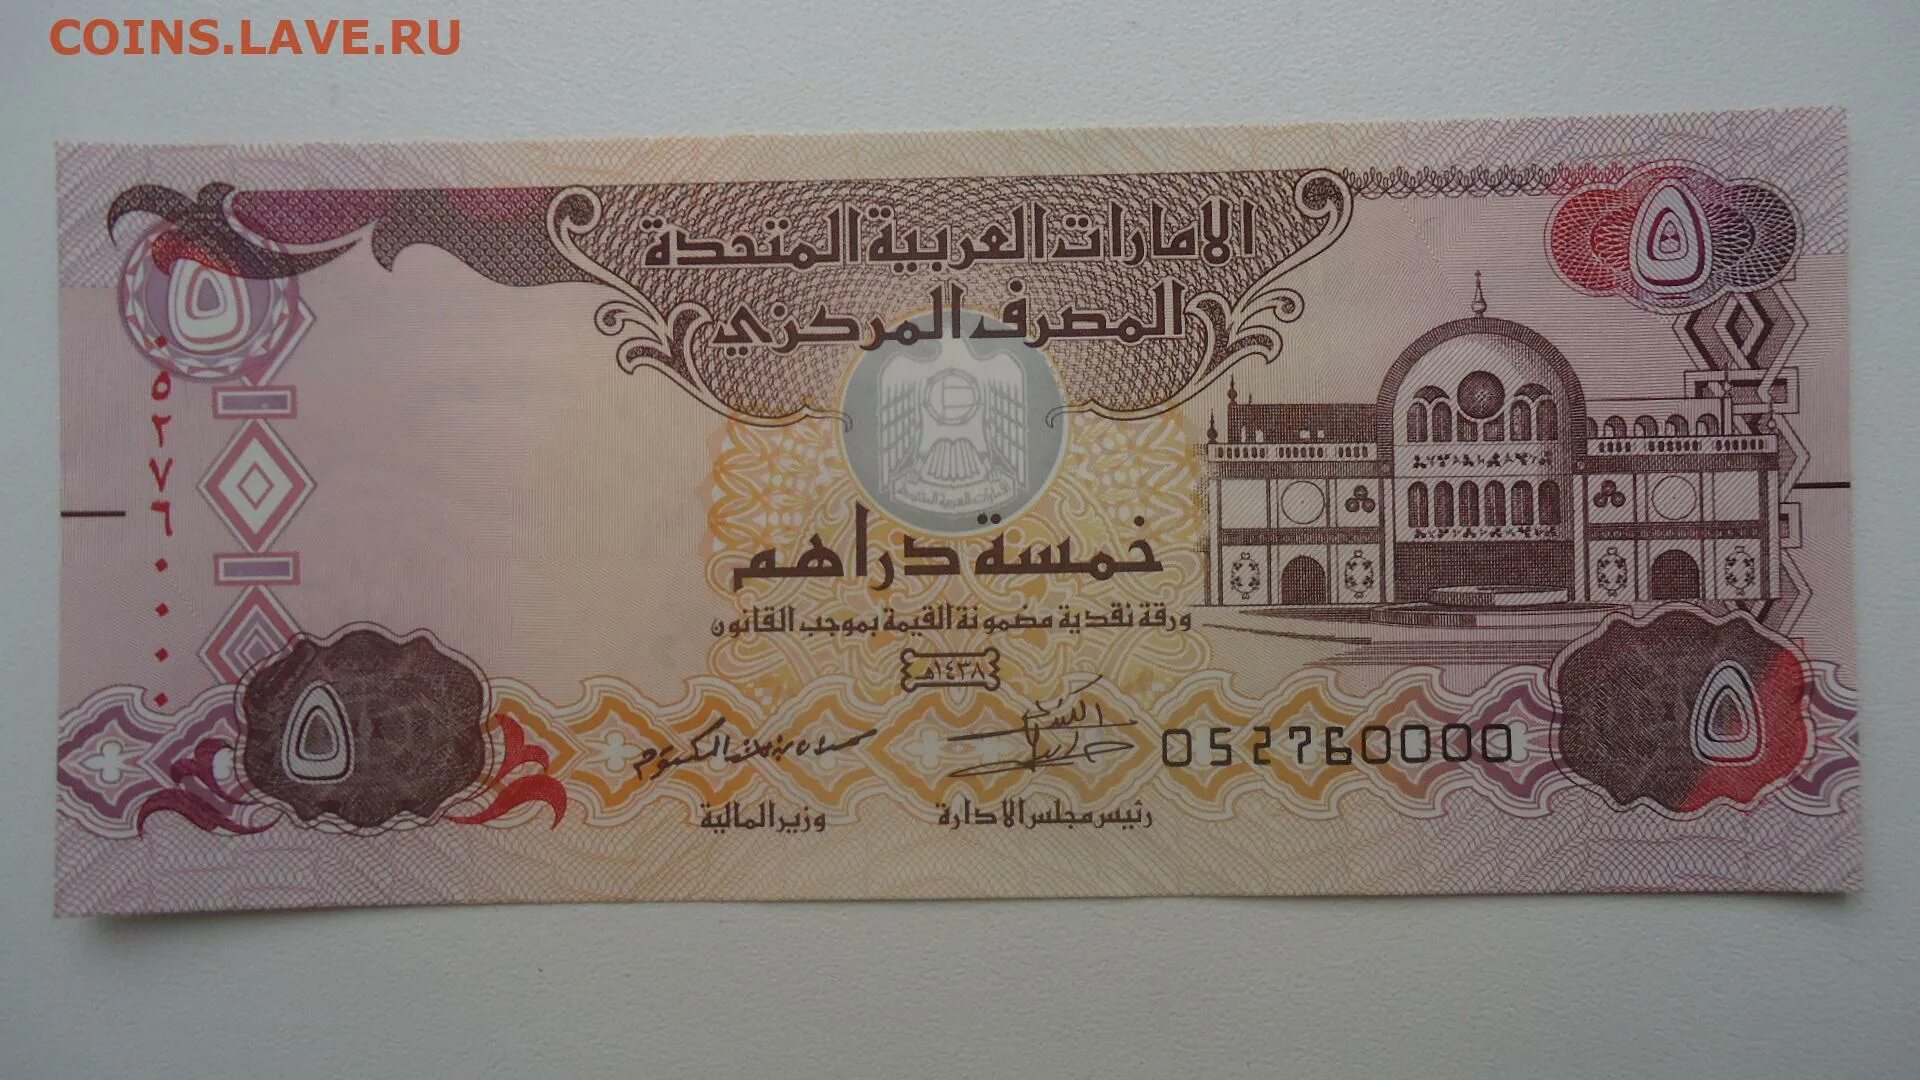 5 Дирхам ОАЭ. Банкнота ОАЭ 10 дирхам. 25 Дирхам Объединенные арабские эмираты. Дирхам ОАЭ К доллару США.